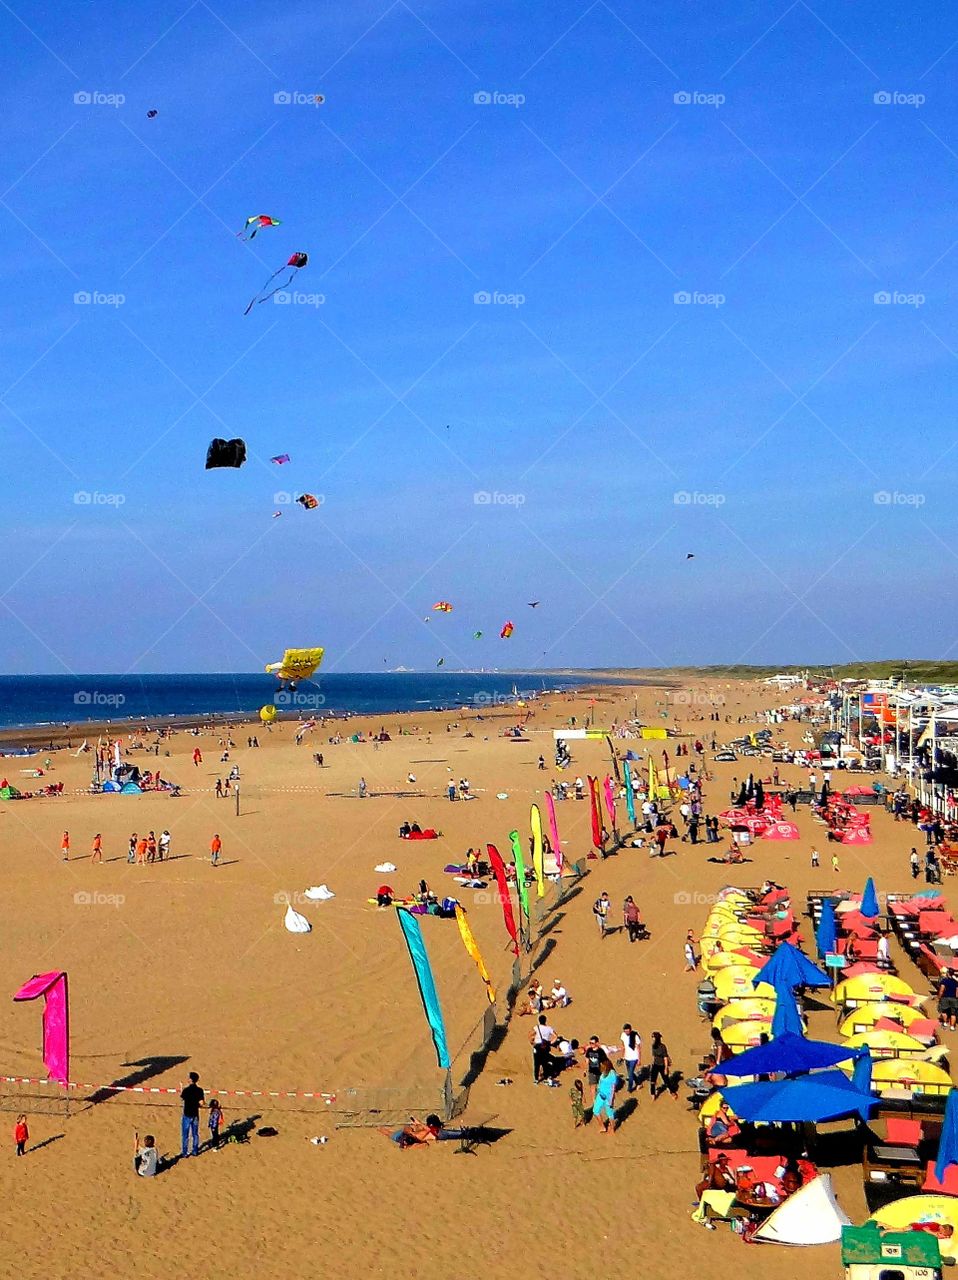 kites @ the beach